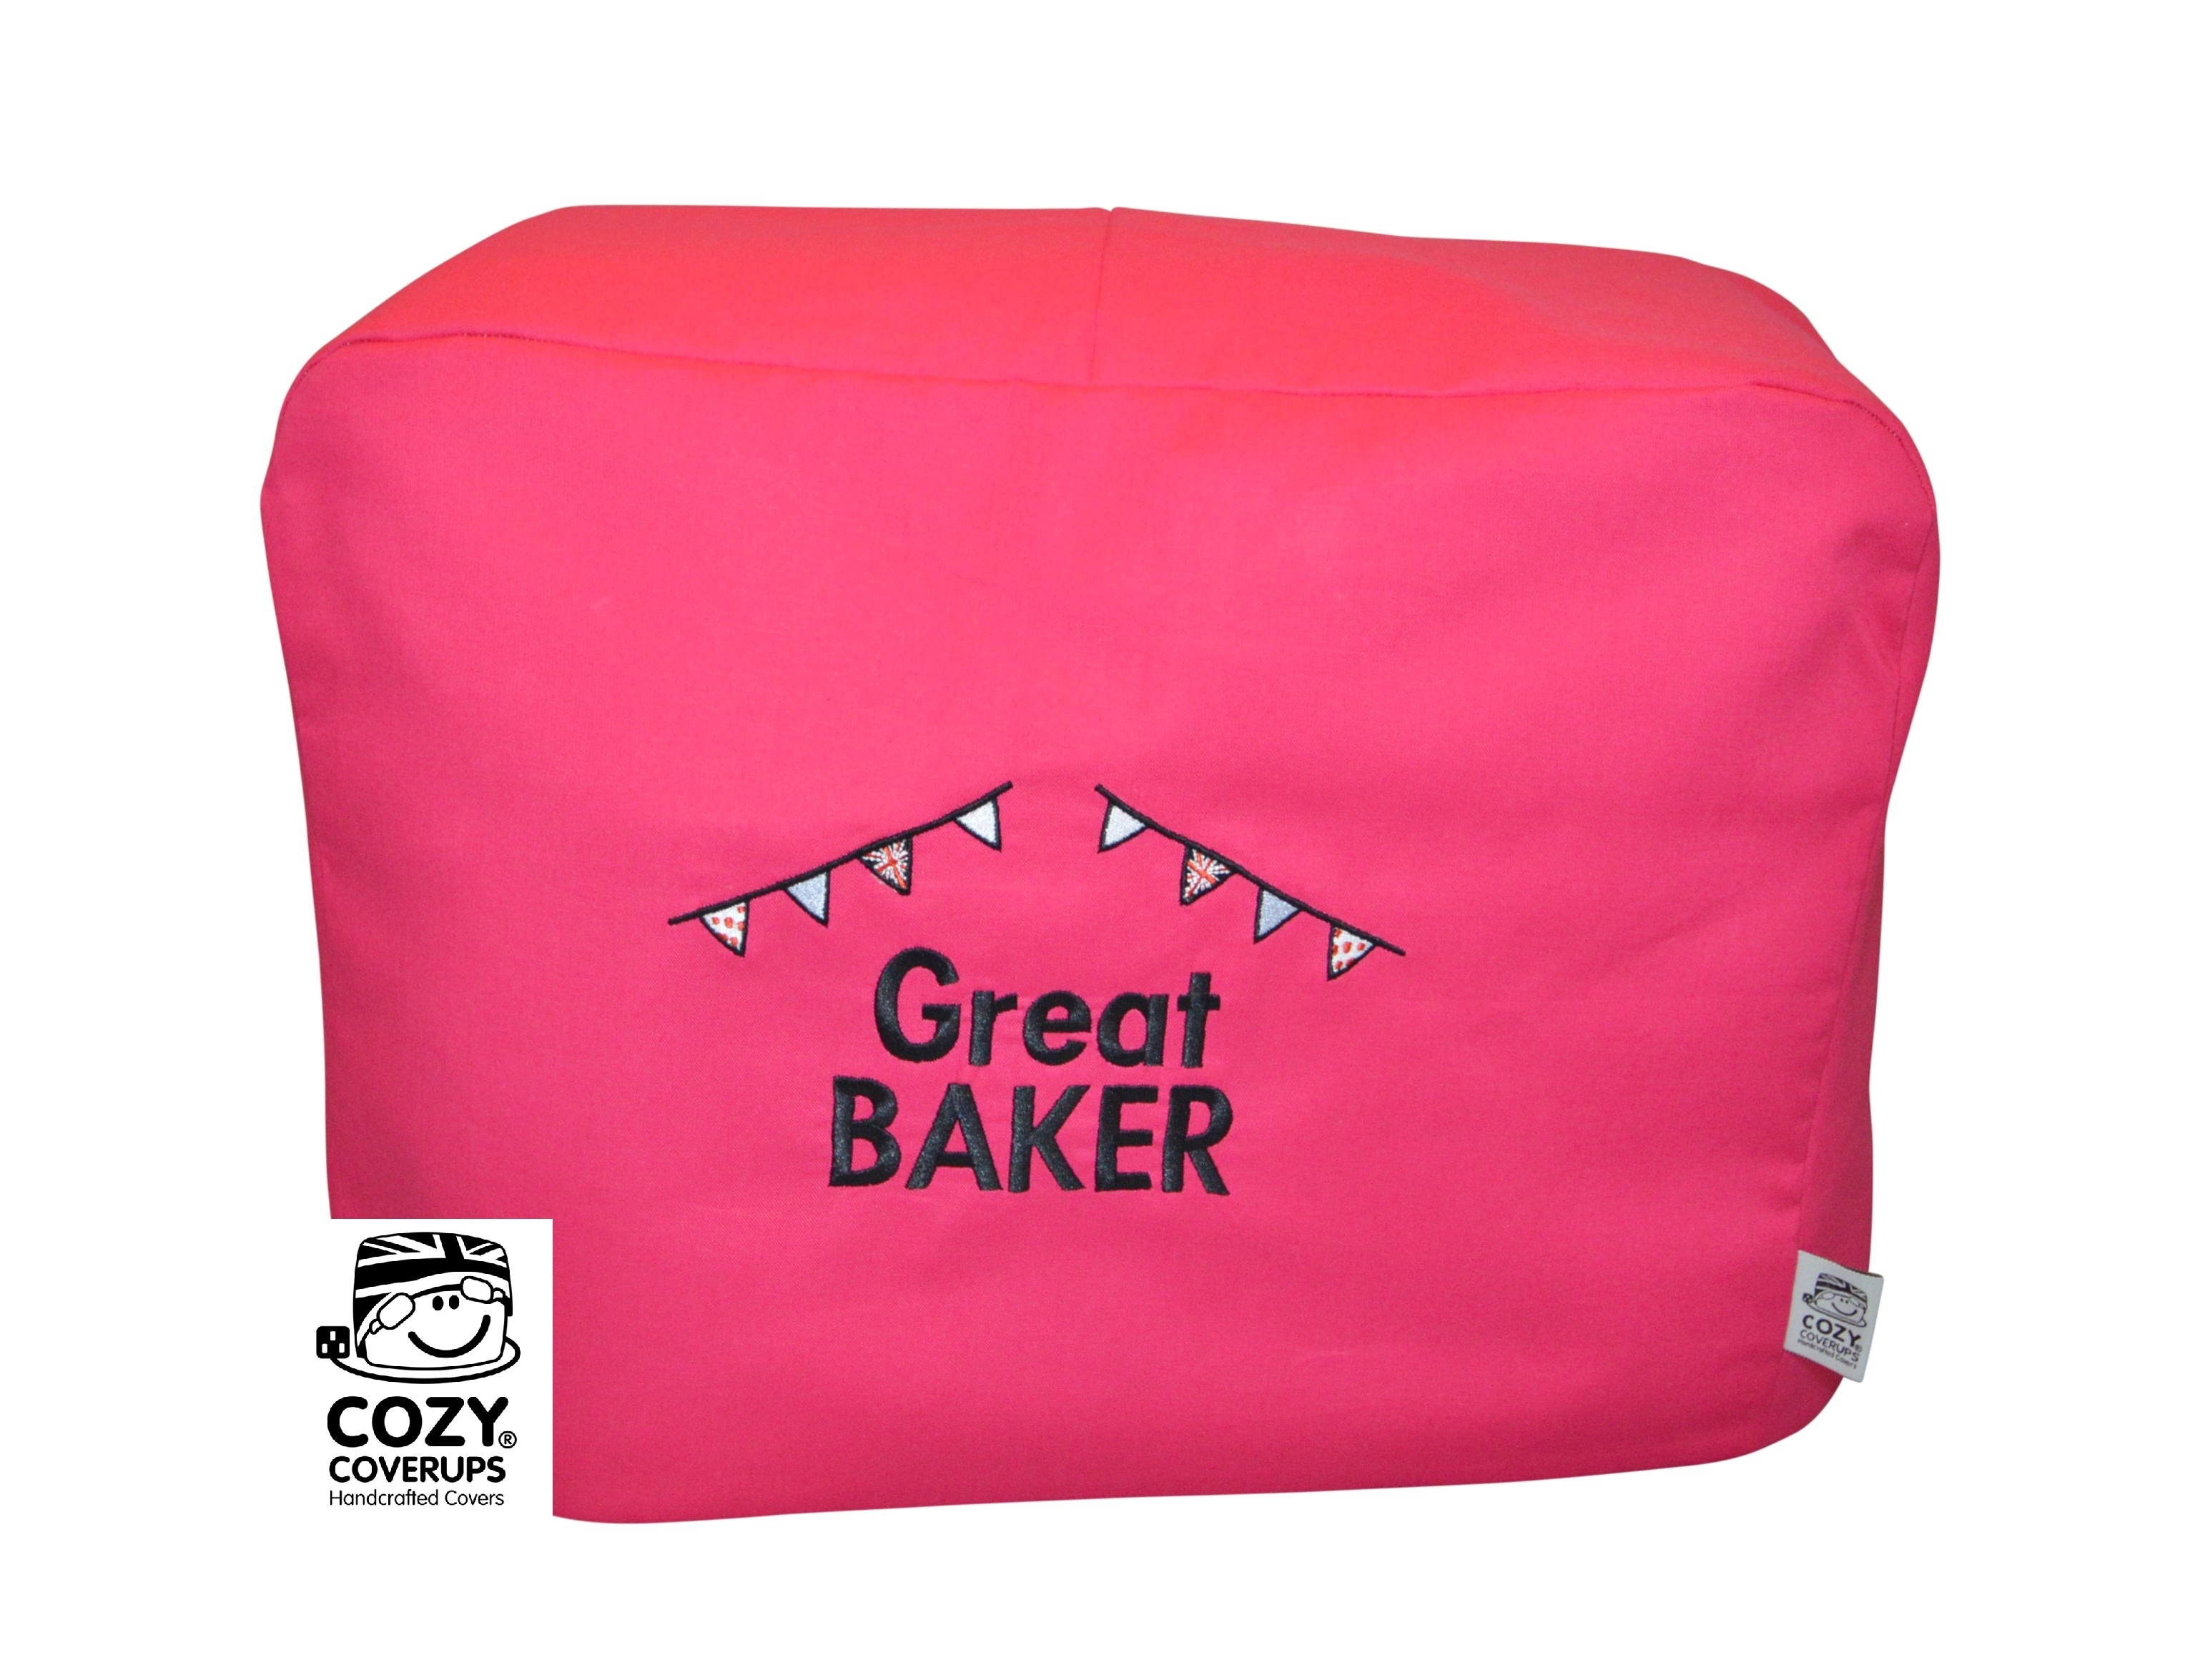 Great baker hot pink logo.jpg